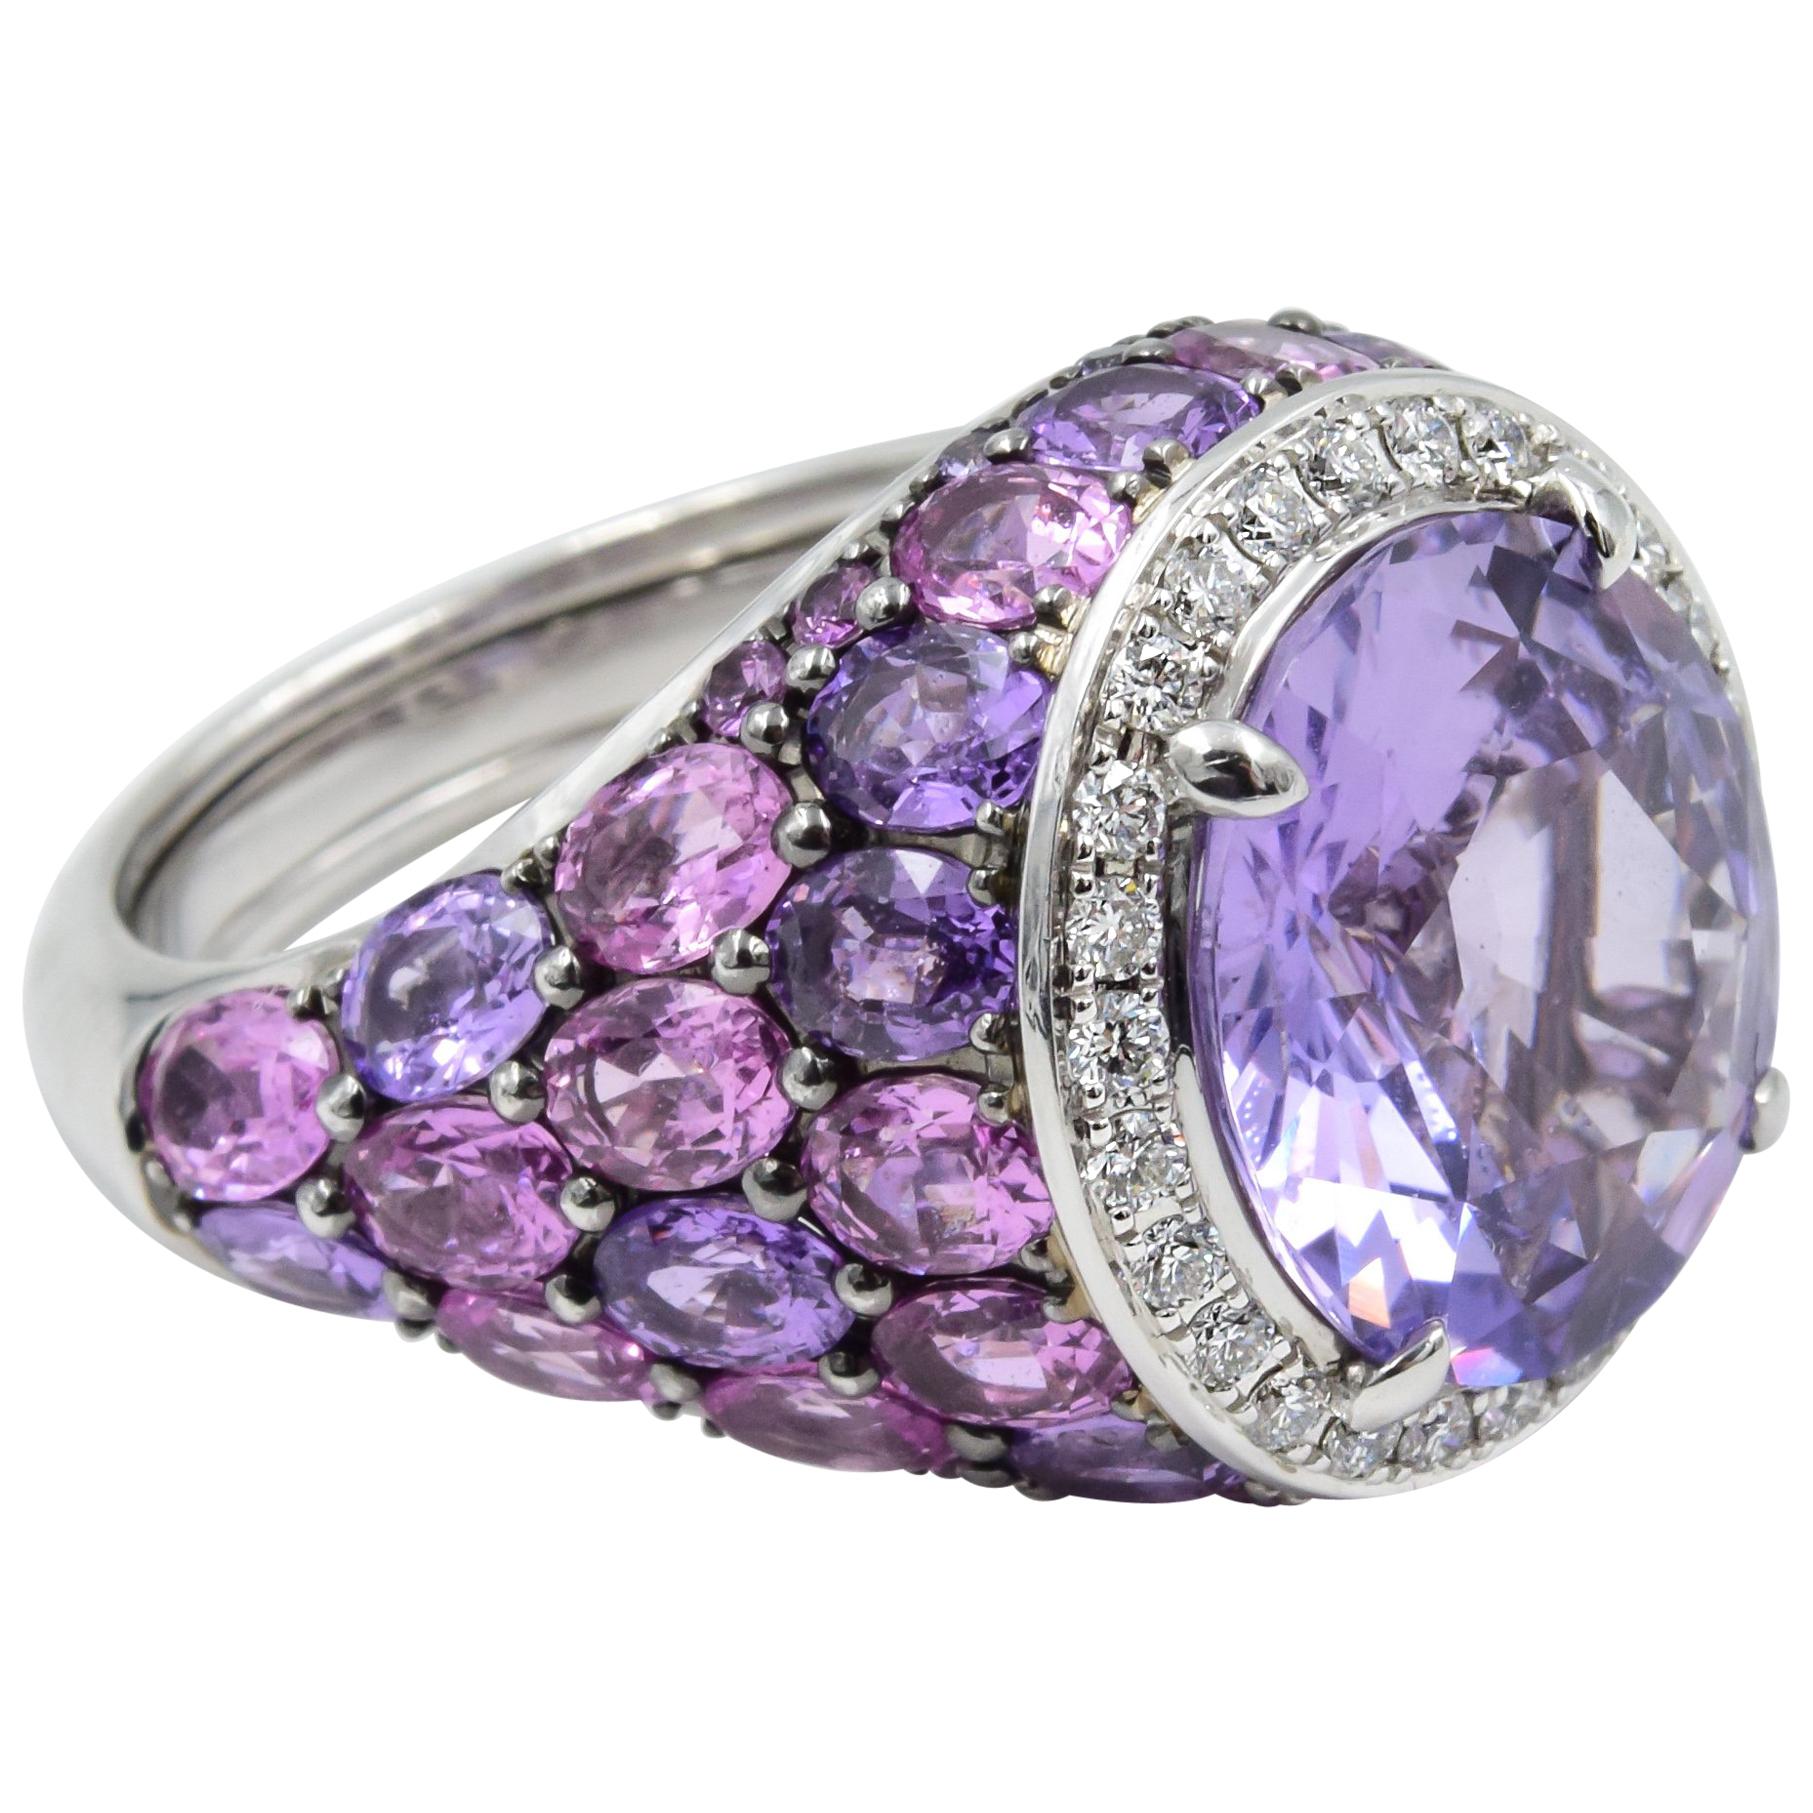 Robert Procop American Glamour Purple and Pink Sapphire Ring in 18 Karat